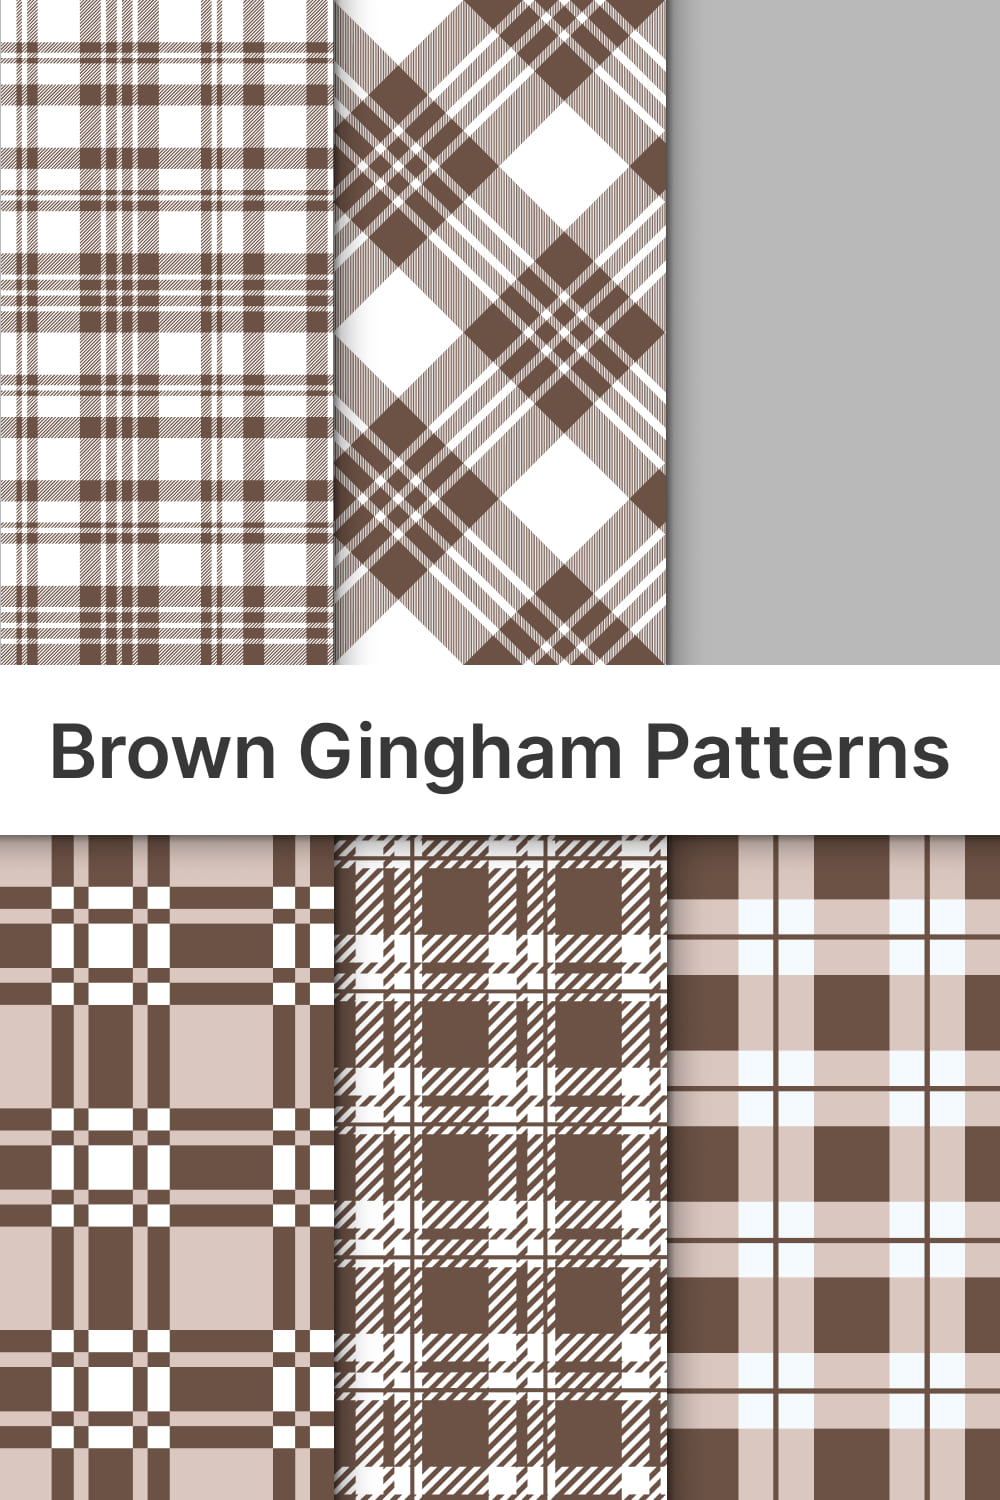 Diverse of brown gingham prints.